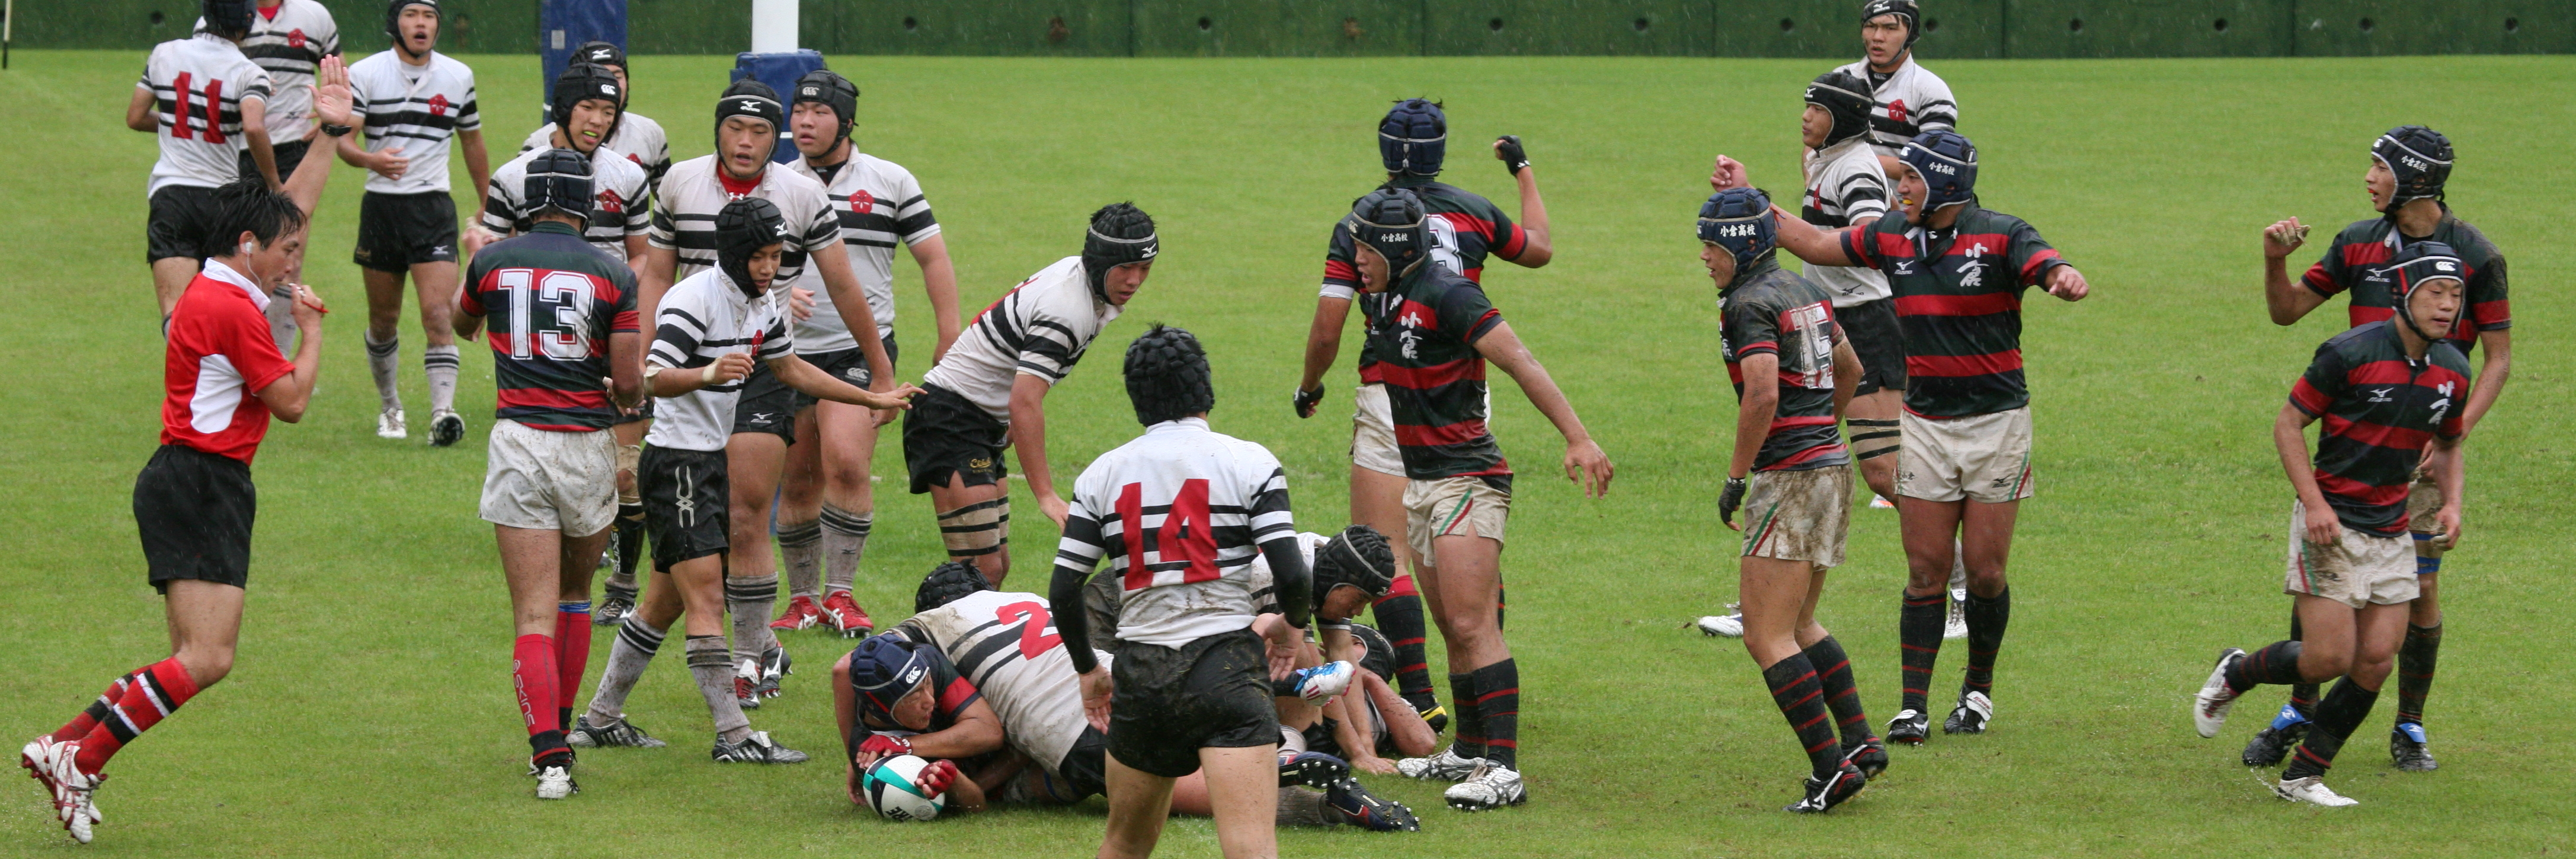 http://kokura-rugby.sakura.ne.jp/2011.5.29-10C.JPG